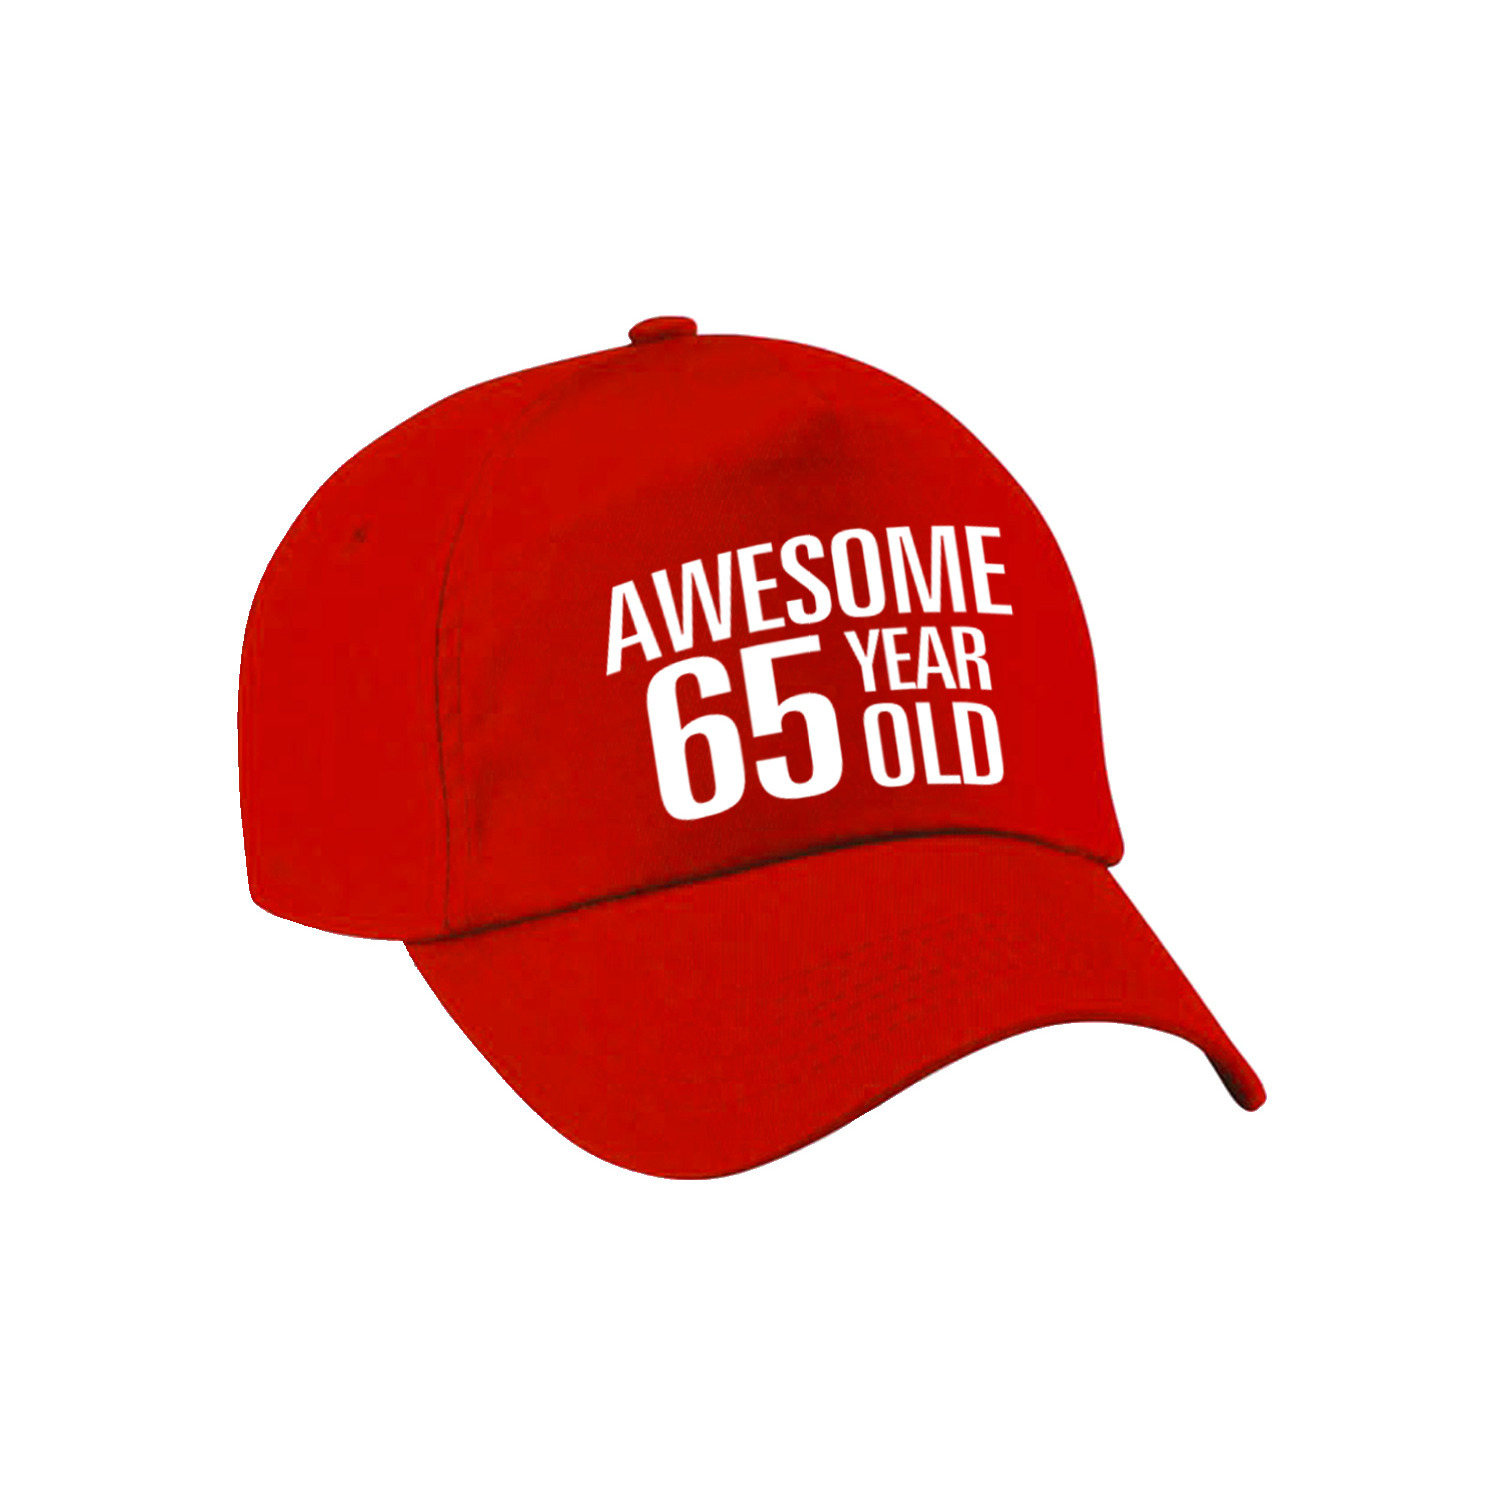 Awesome 65 year old verjaardag pet / cap rood voor dames en heren